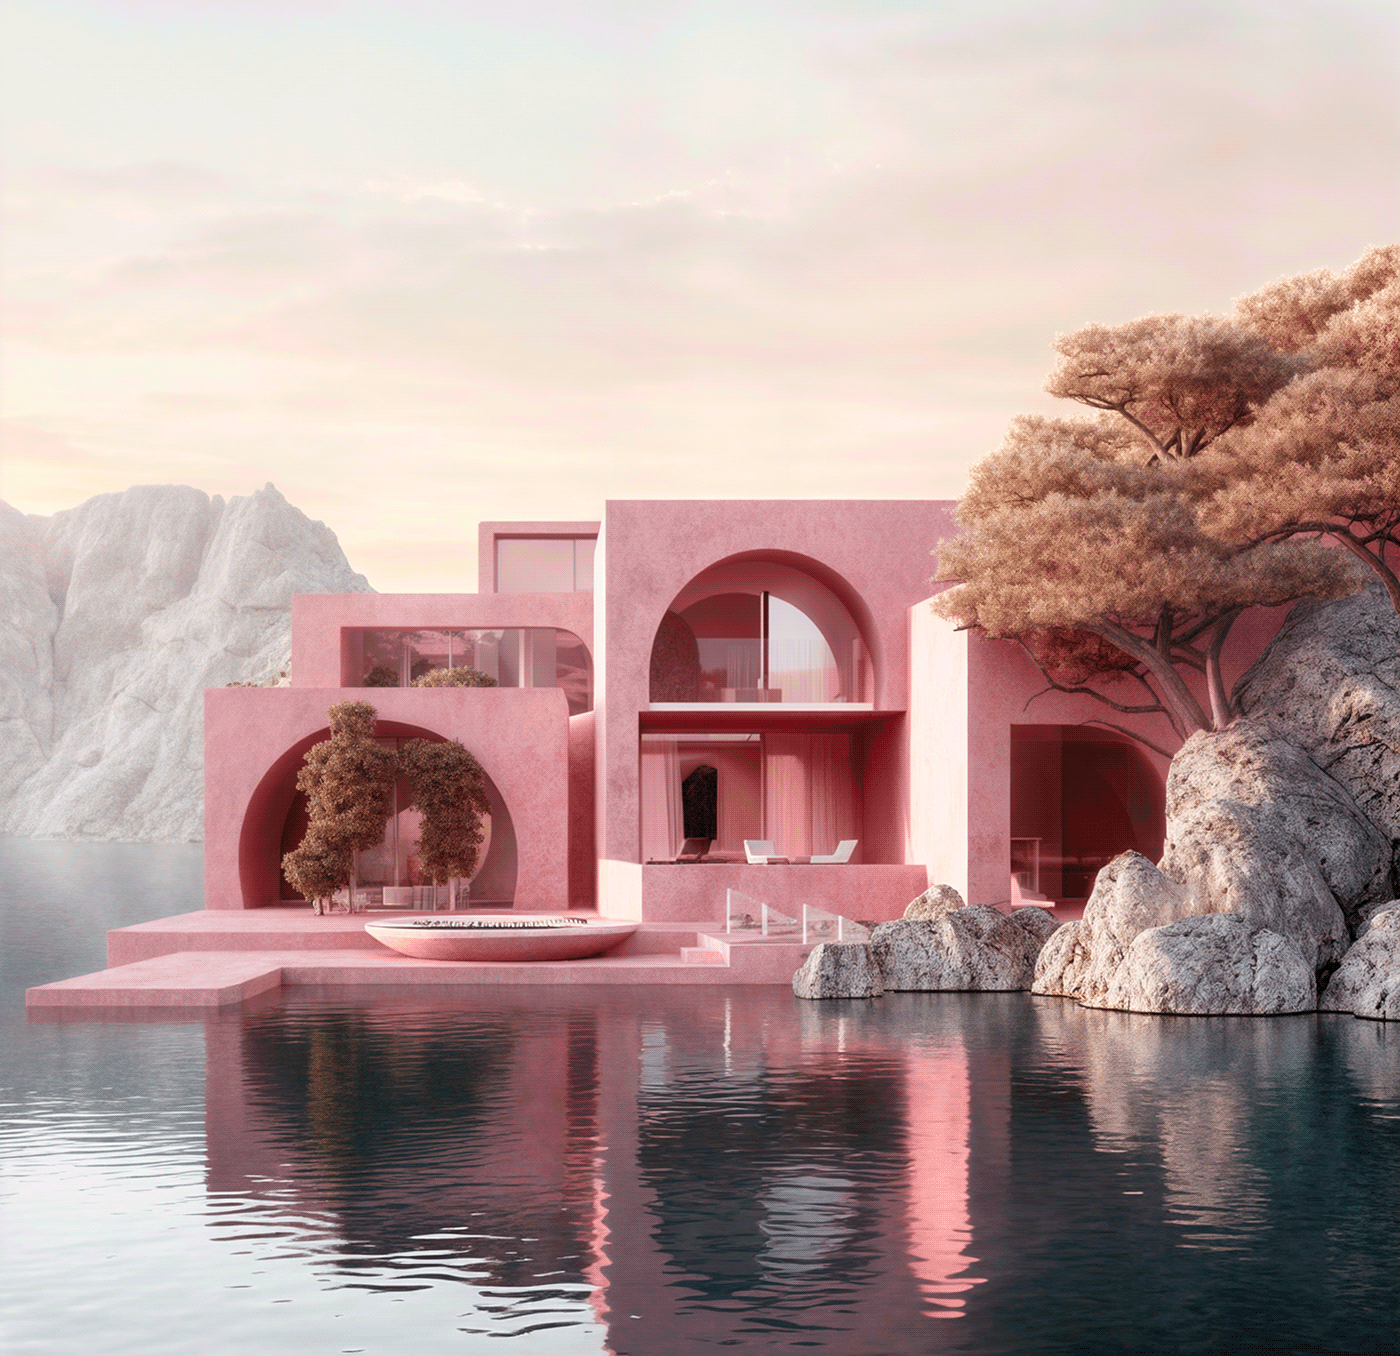 archviz Brutalist Brutalism architecture visualization dreamscape Render architectural design brutalism design pink architecture